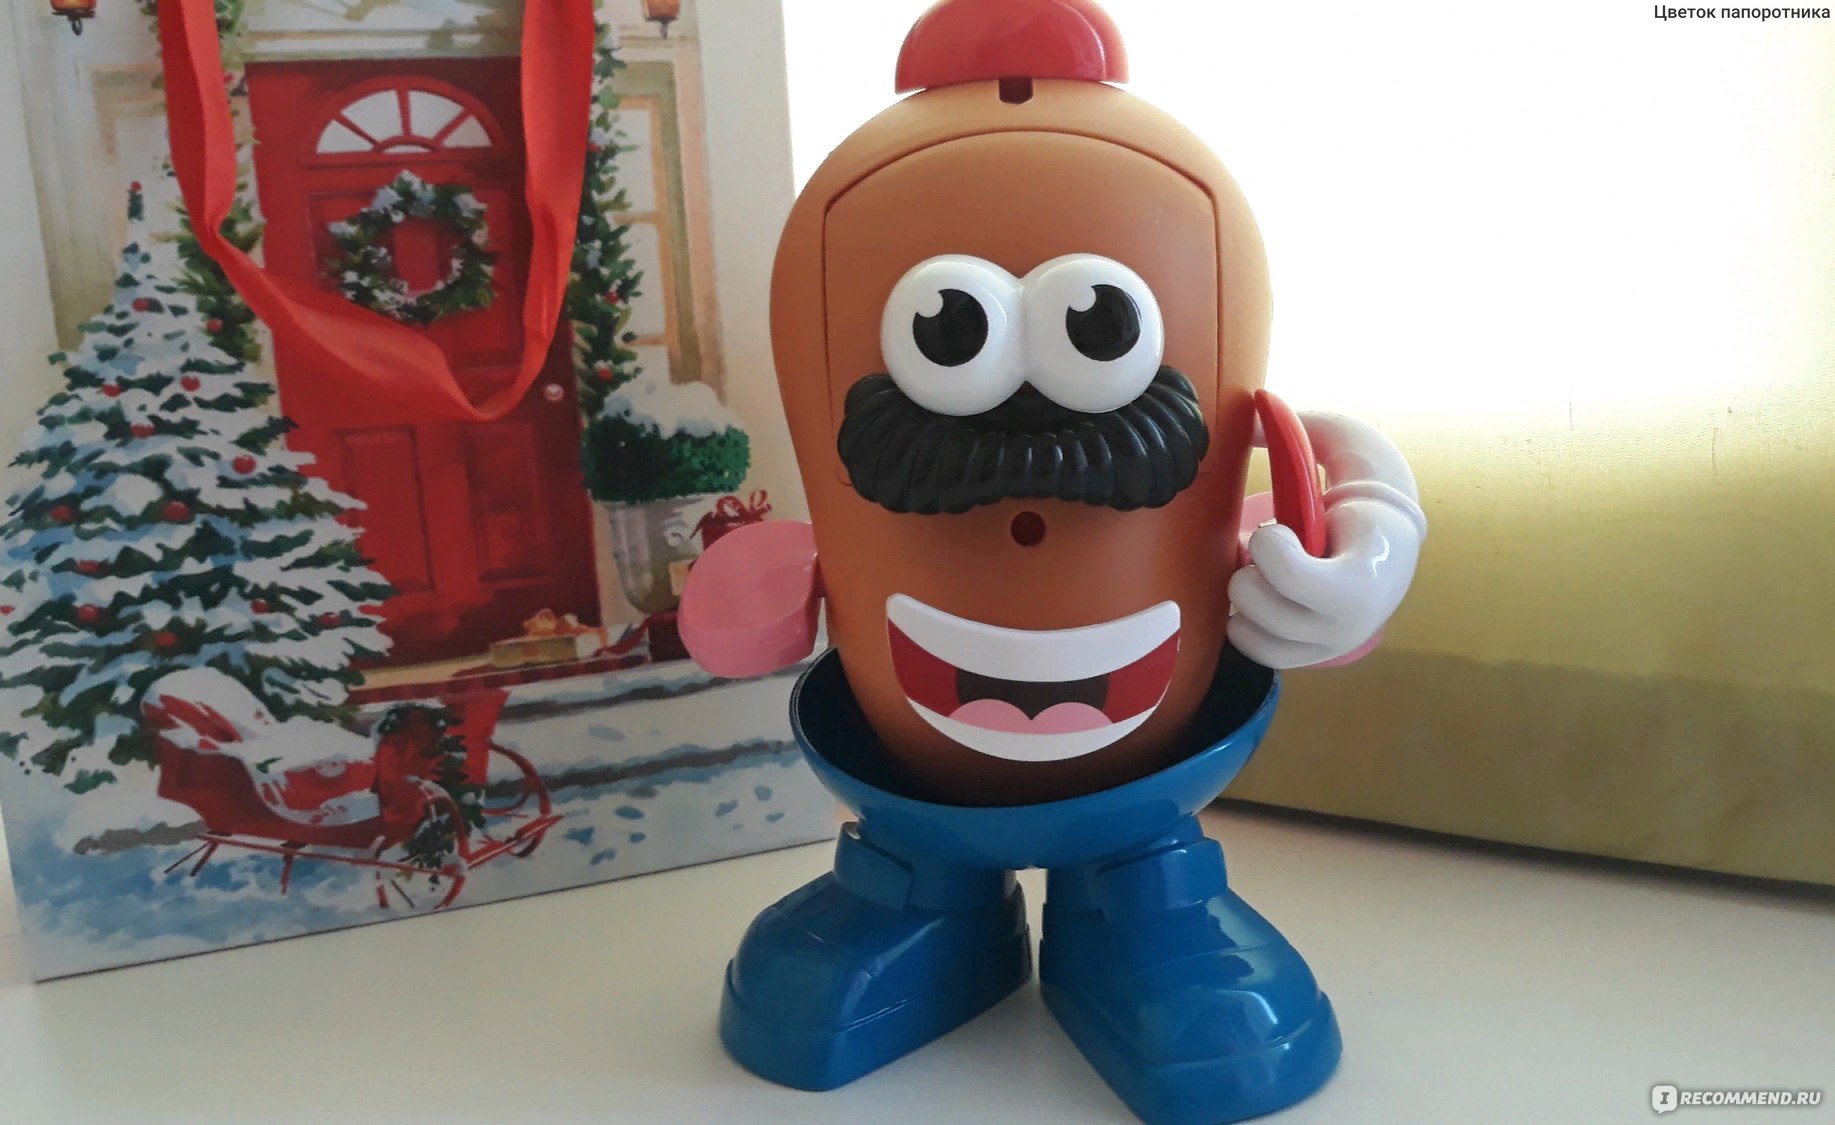 Playskool Mr. Potato Head Мистер Картофельная голова.